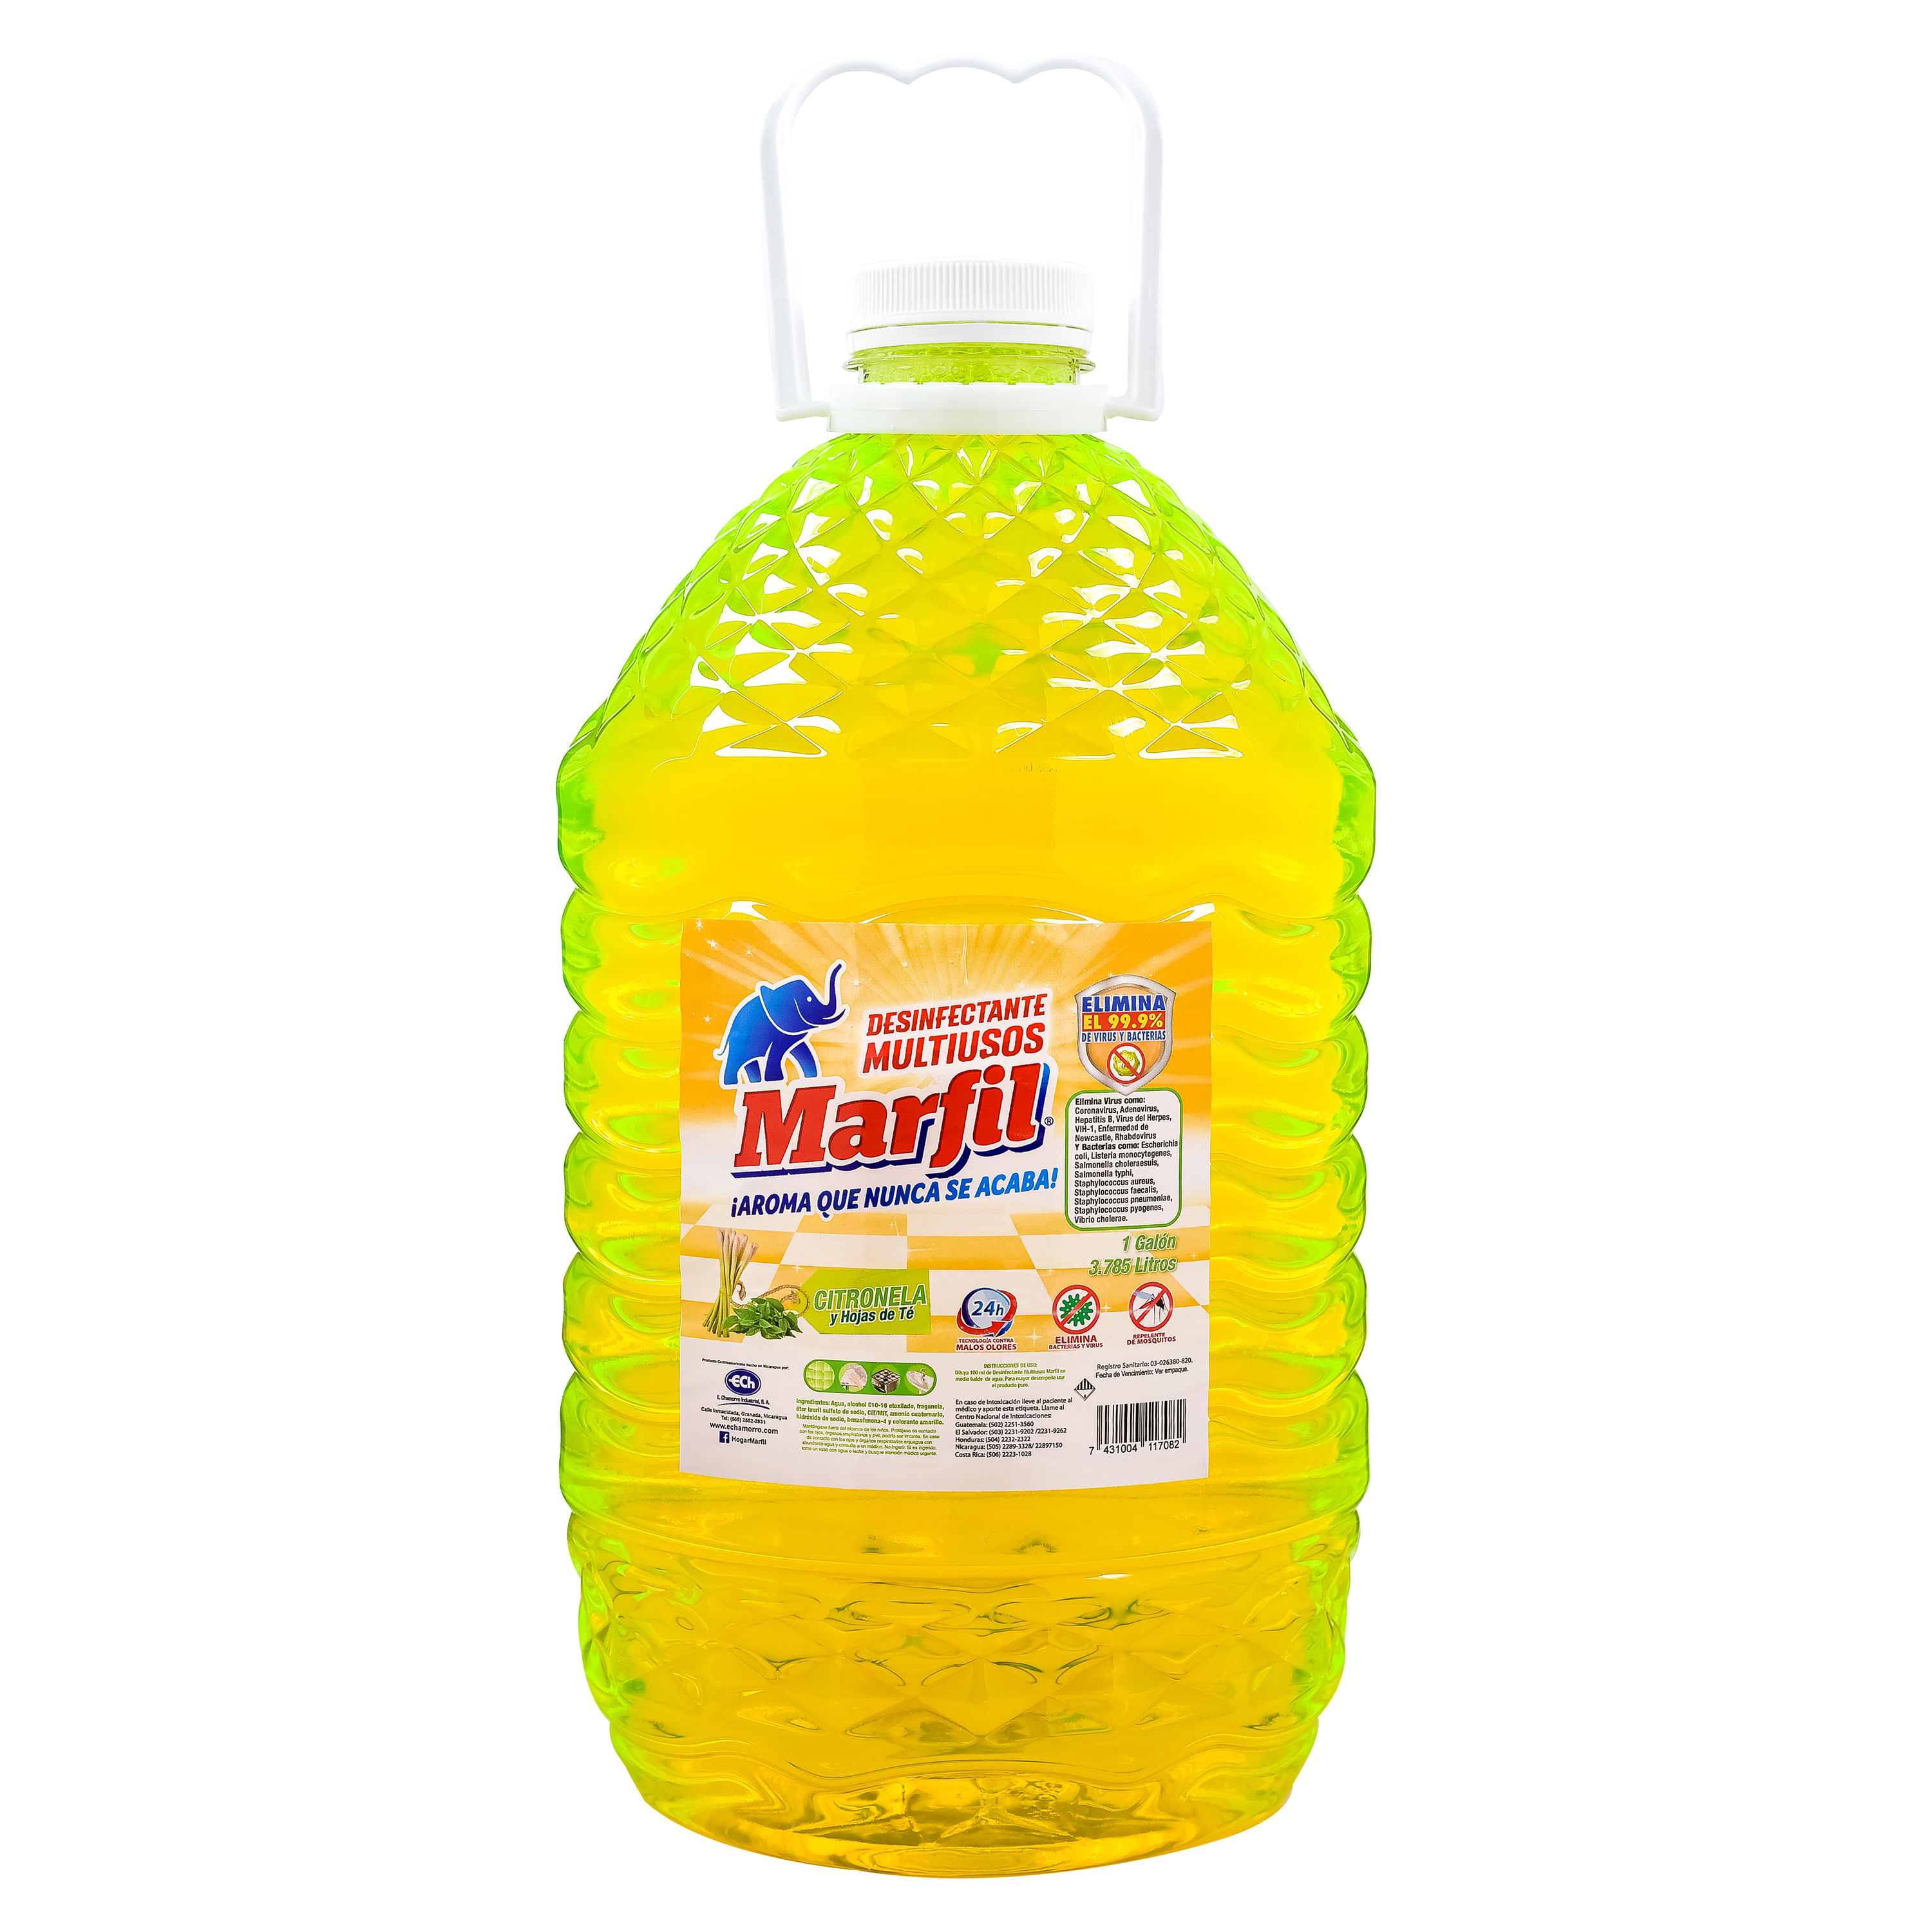 Desinfectante-Marfil-Citronela-3785Ml-1-6930